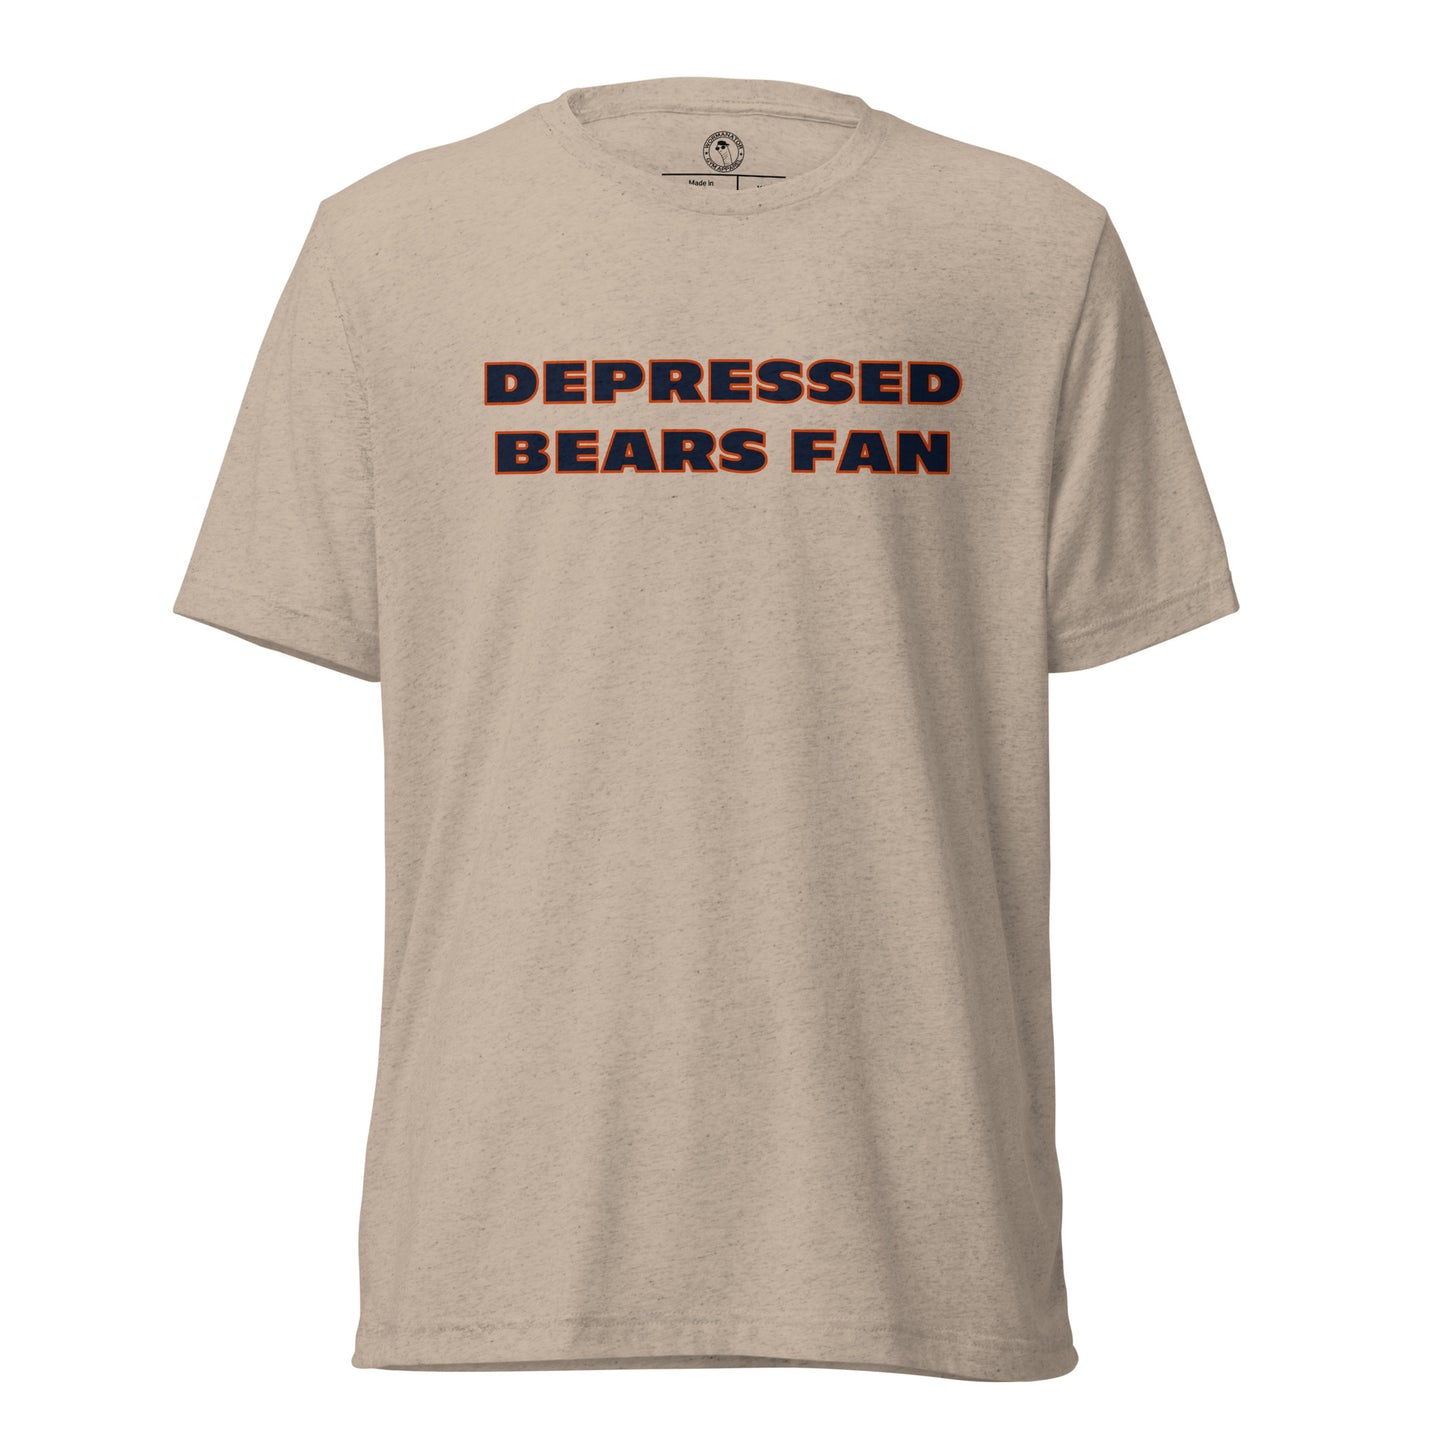 Depressed Chicago Bears Fan Shirt in Tan Triblend